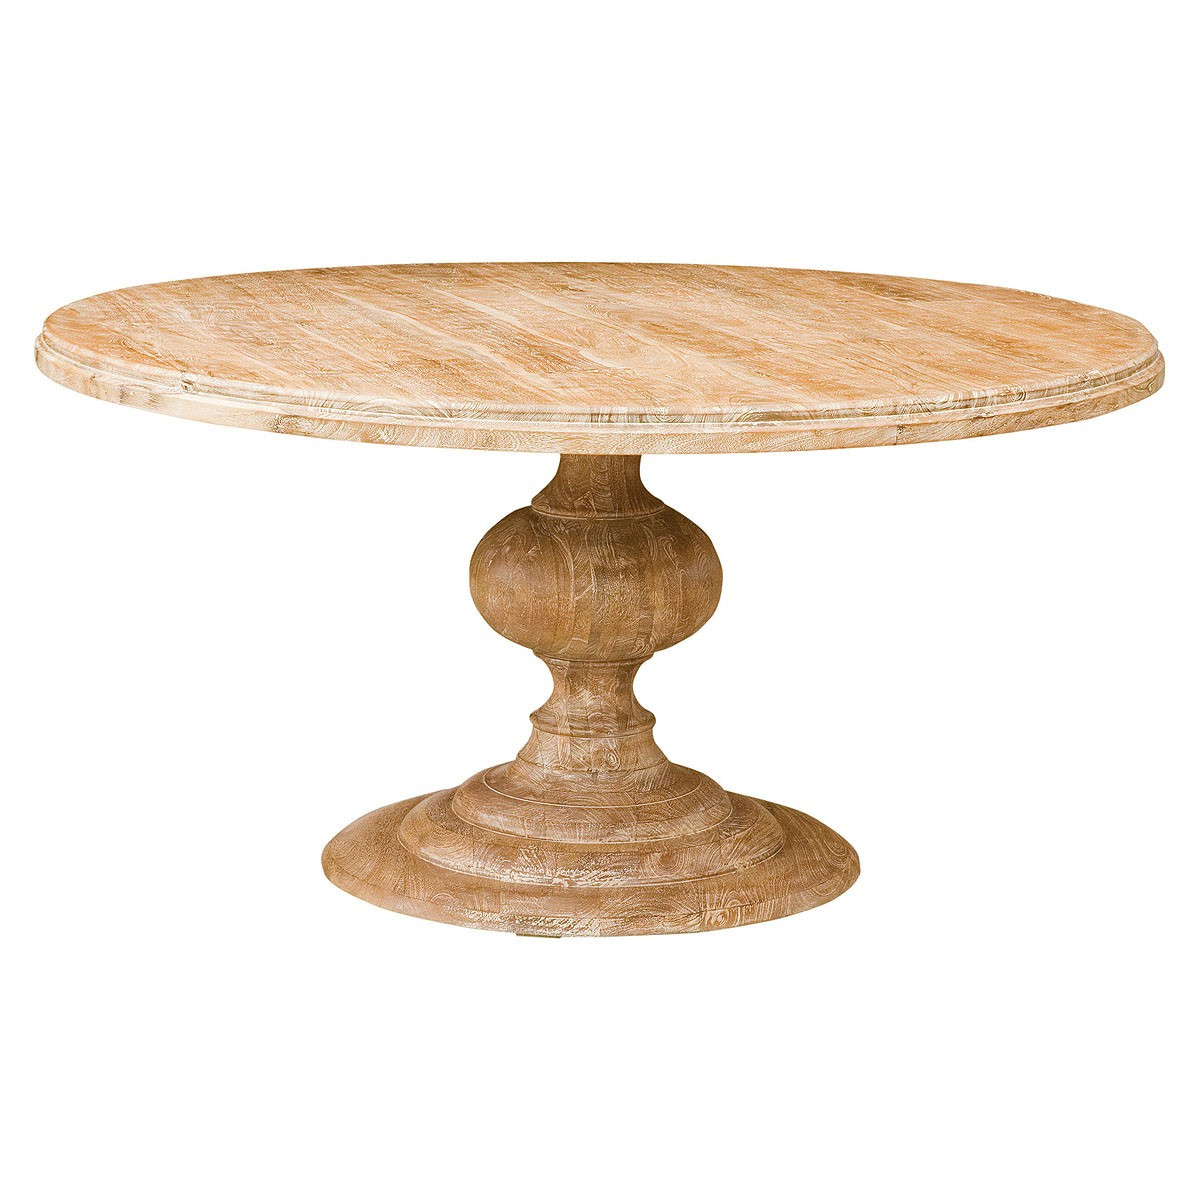 Magnolia 60 Inch Round Pedestal Dining Table  45707.1374283127.1280.1280 ?c=2